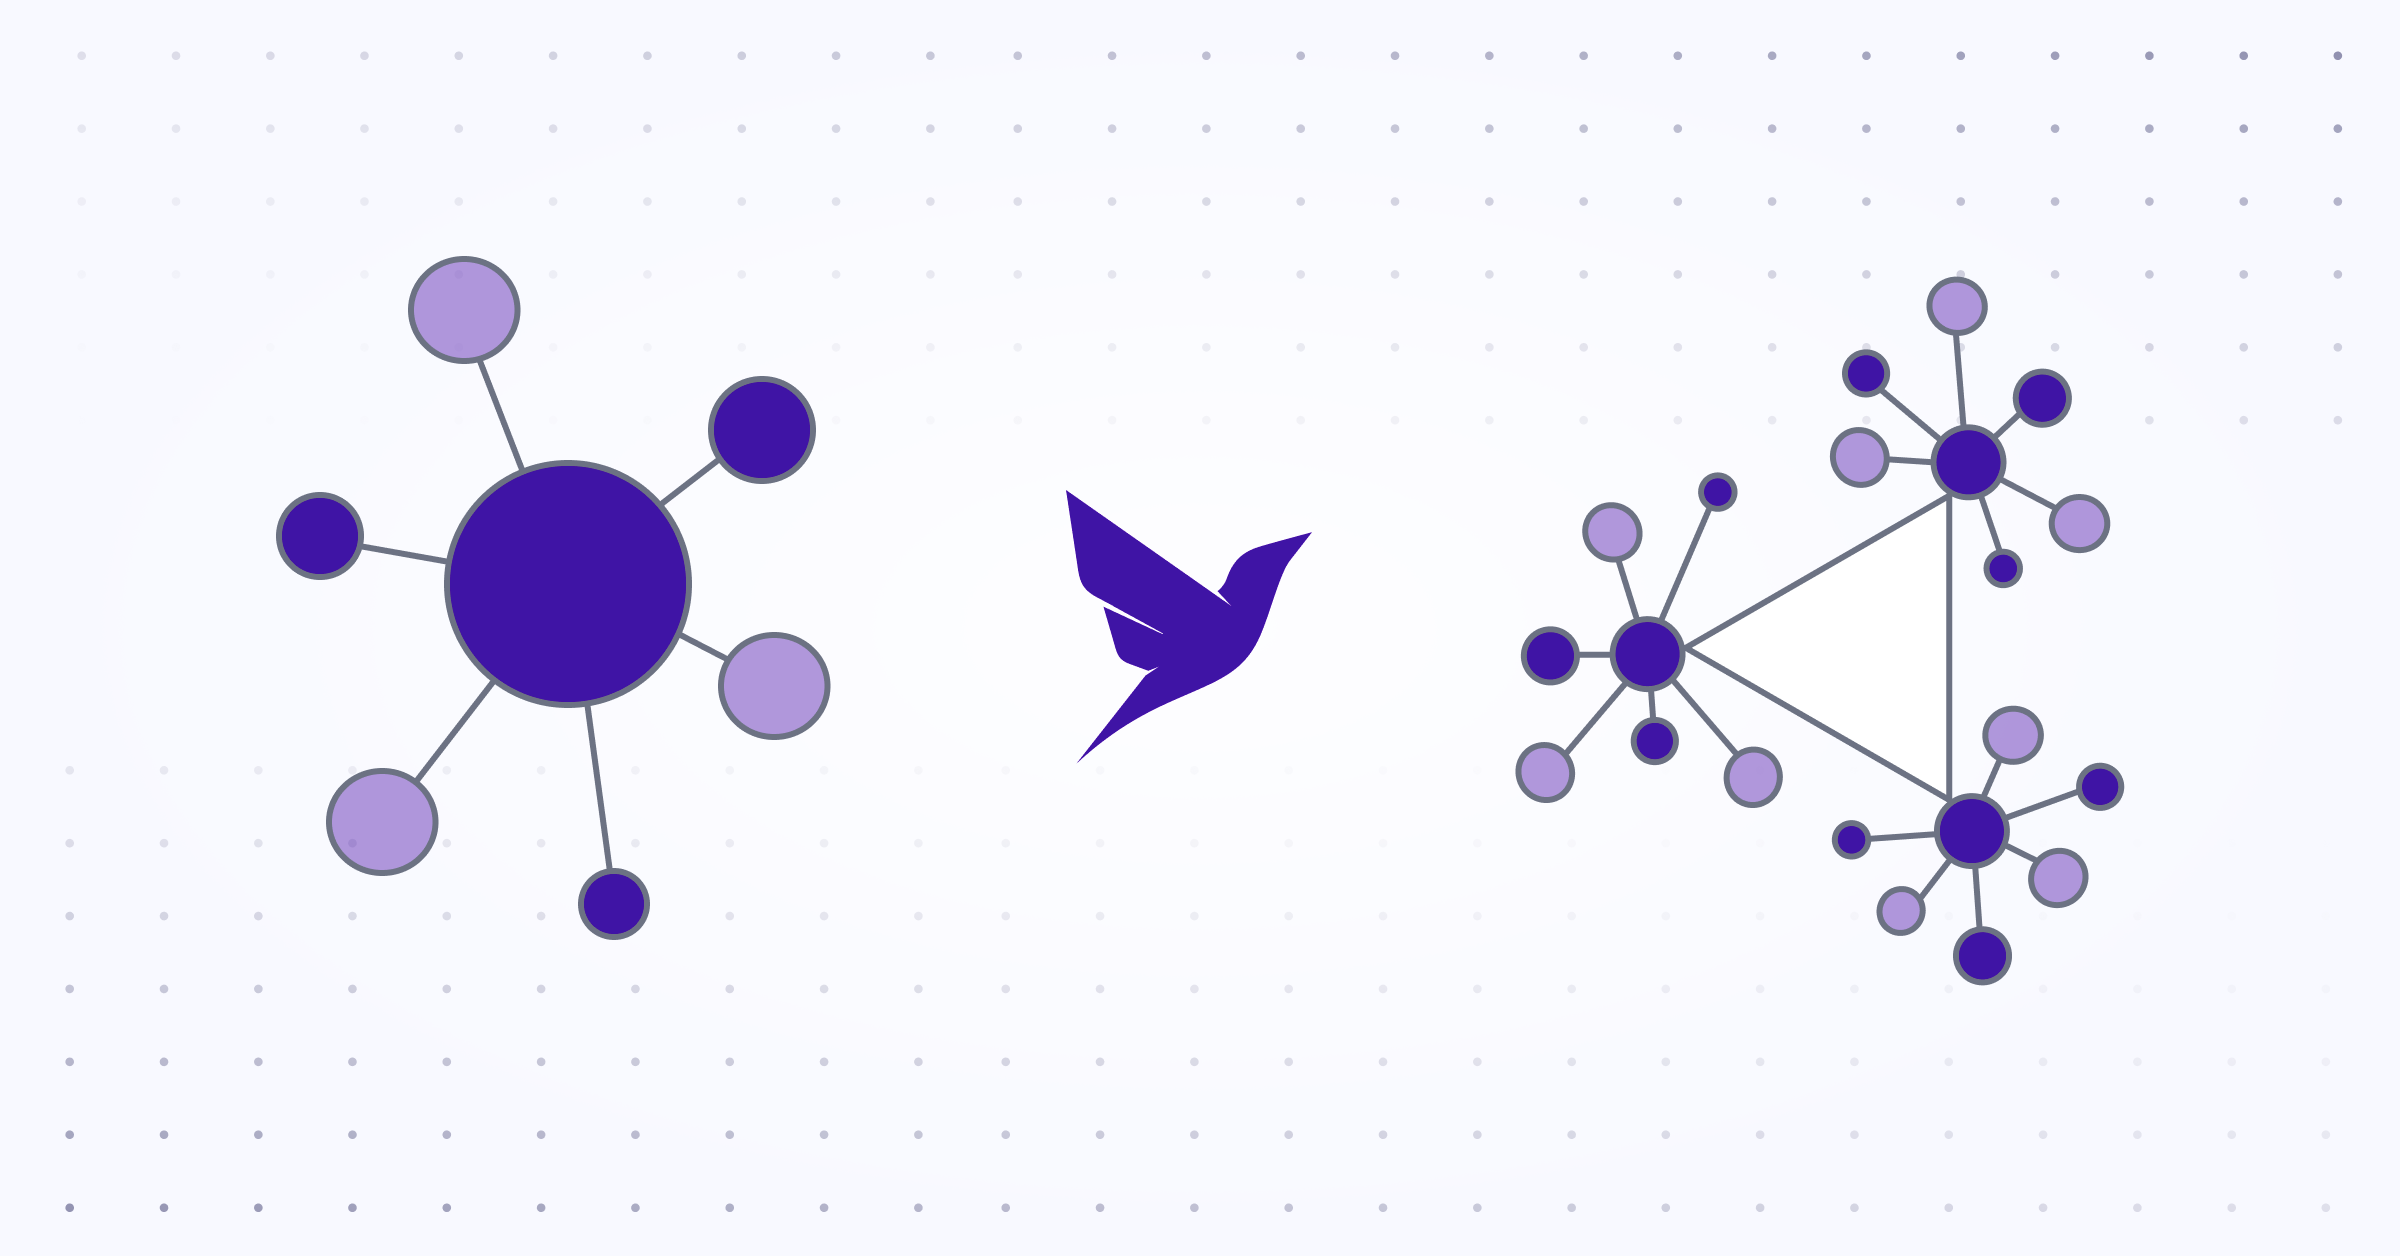 centralized-decentralized-purple